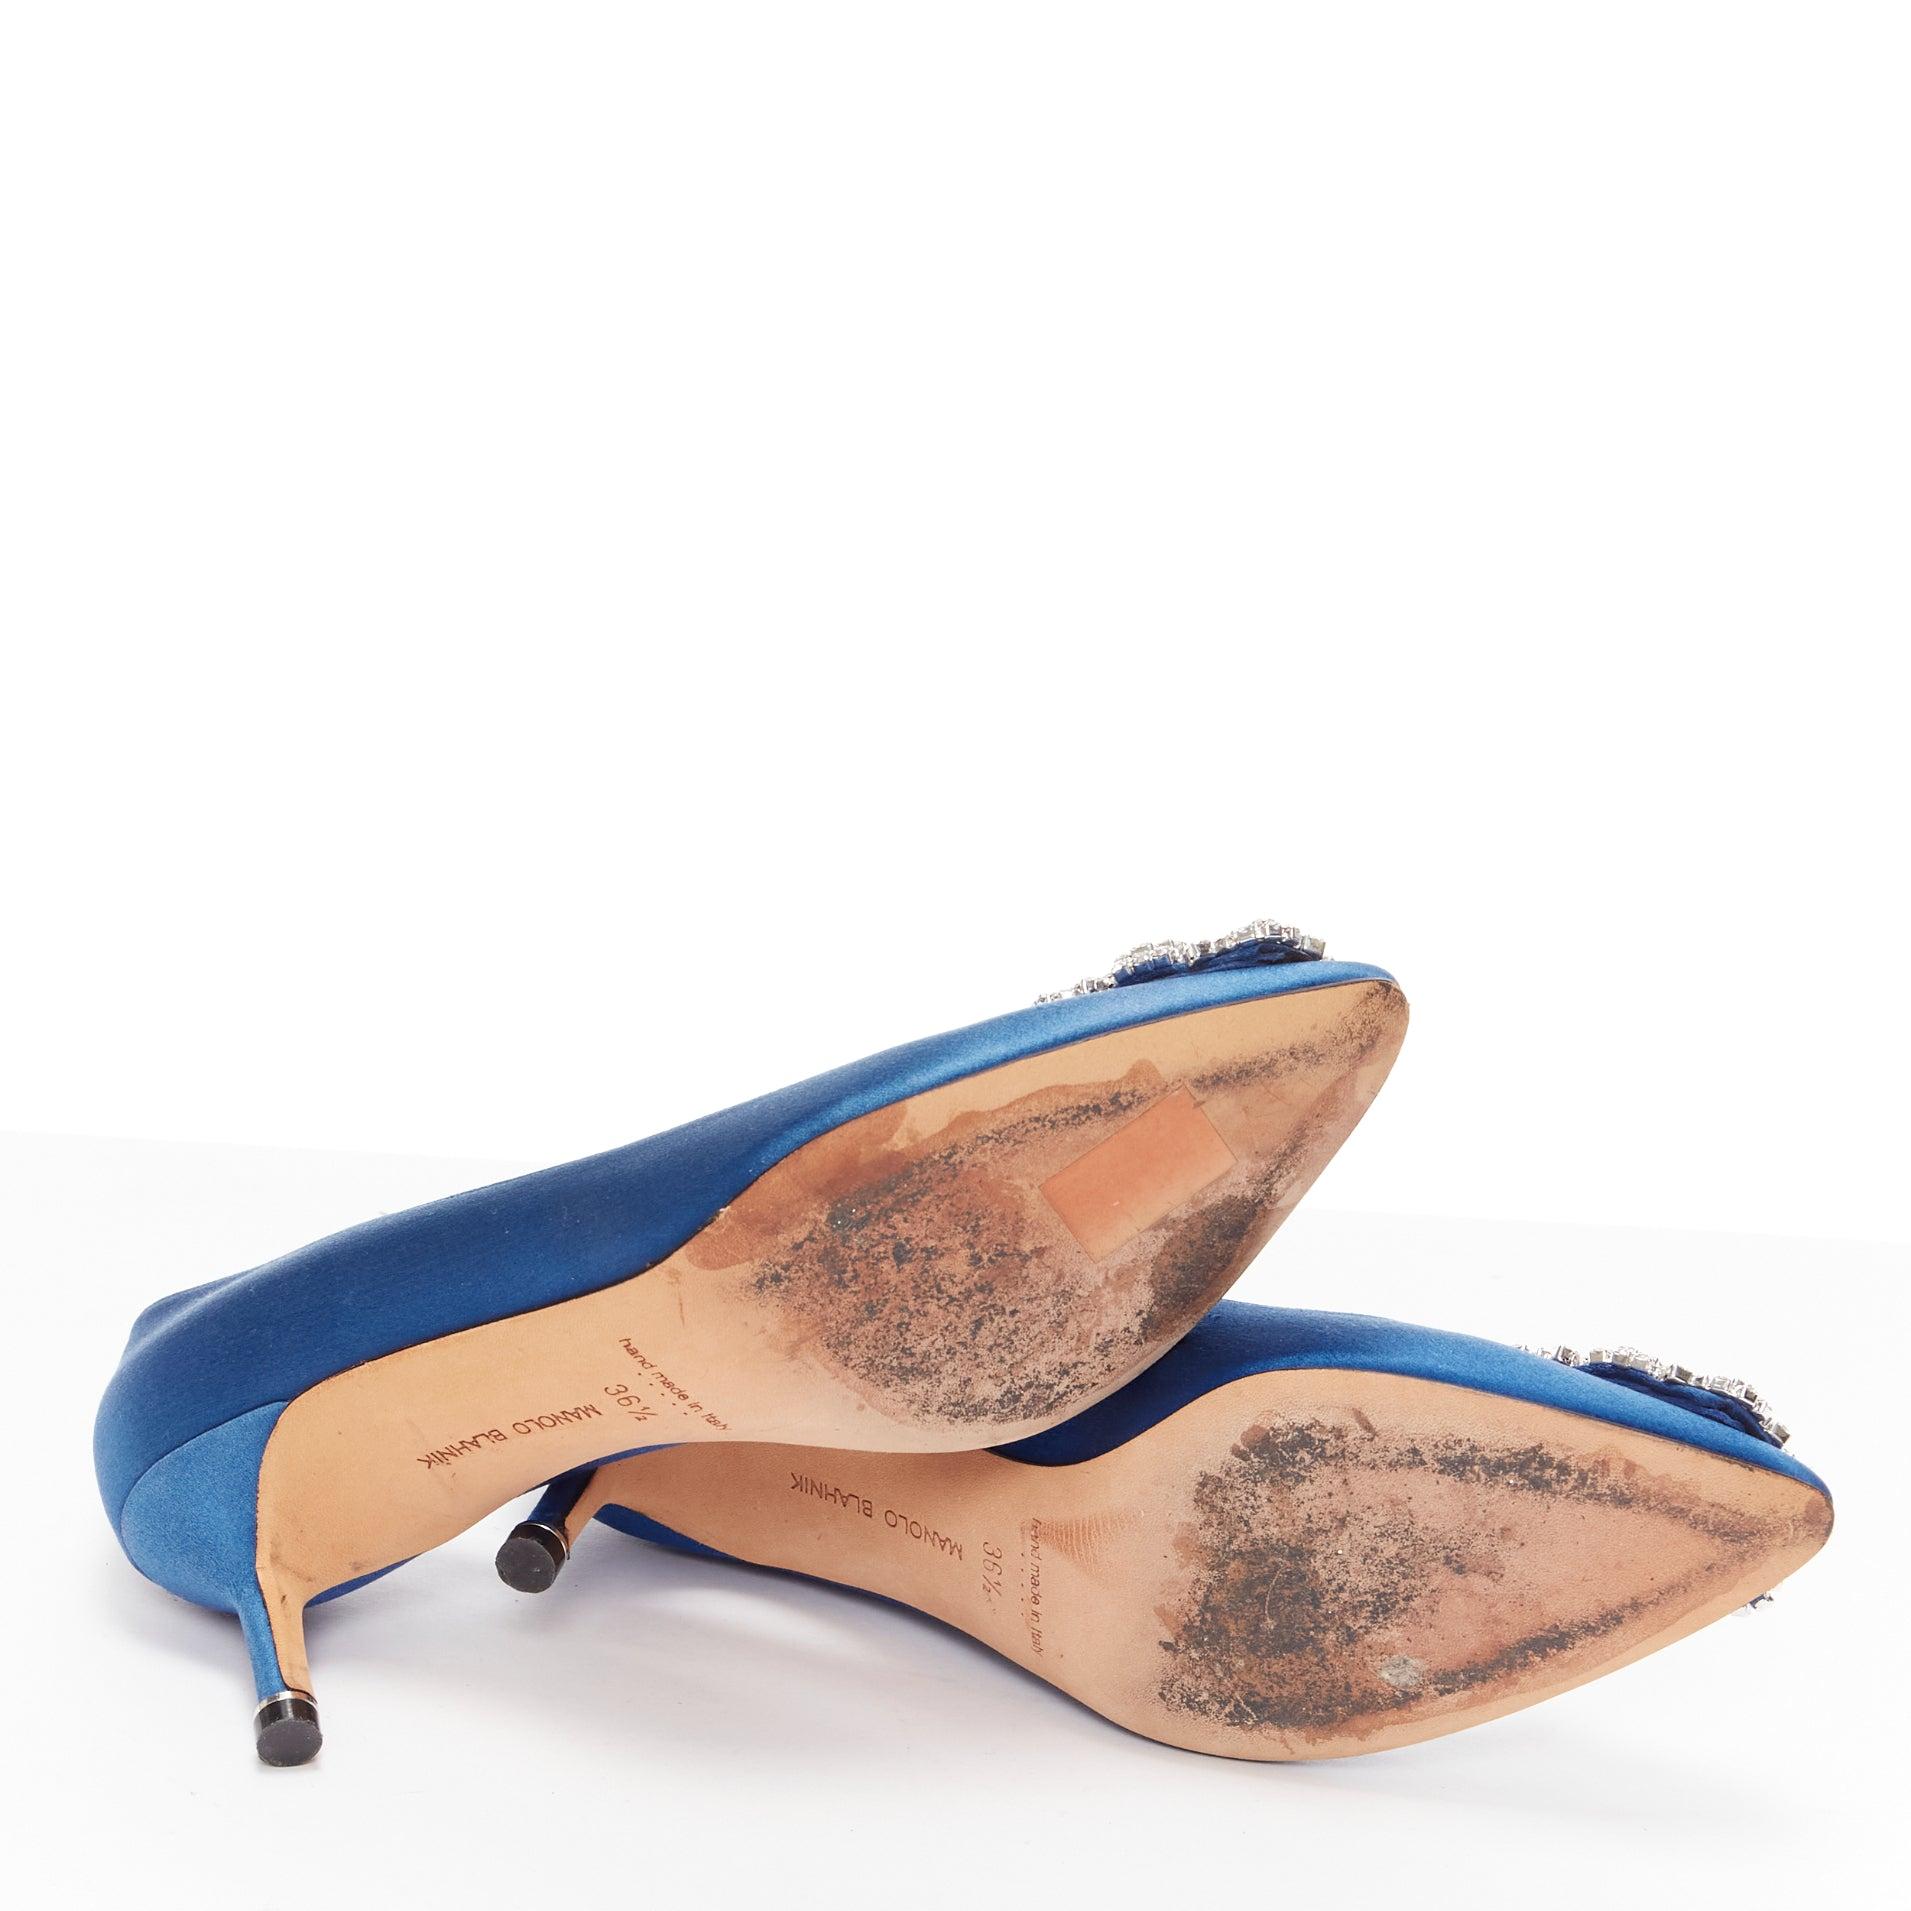 MANOLO BLAHNIK Hangisi 50 blue satin crystal buckle teacup heeled pumps EU36.5 For Sale 7